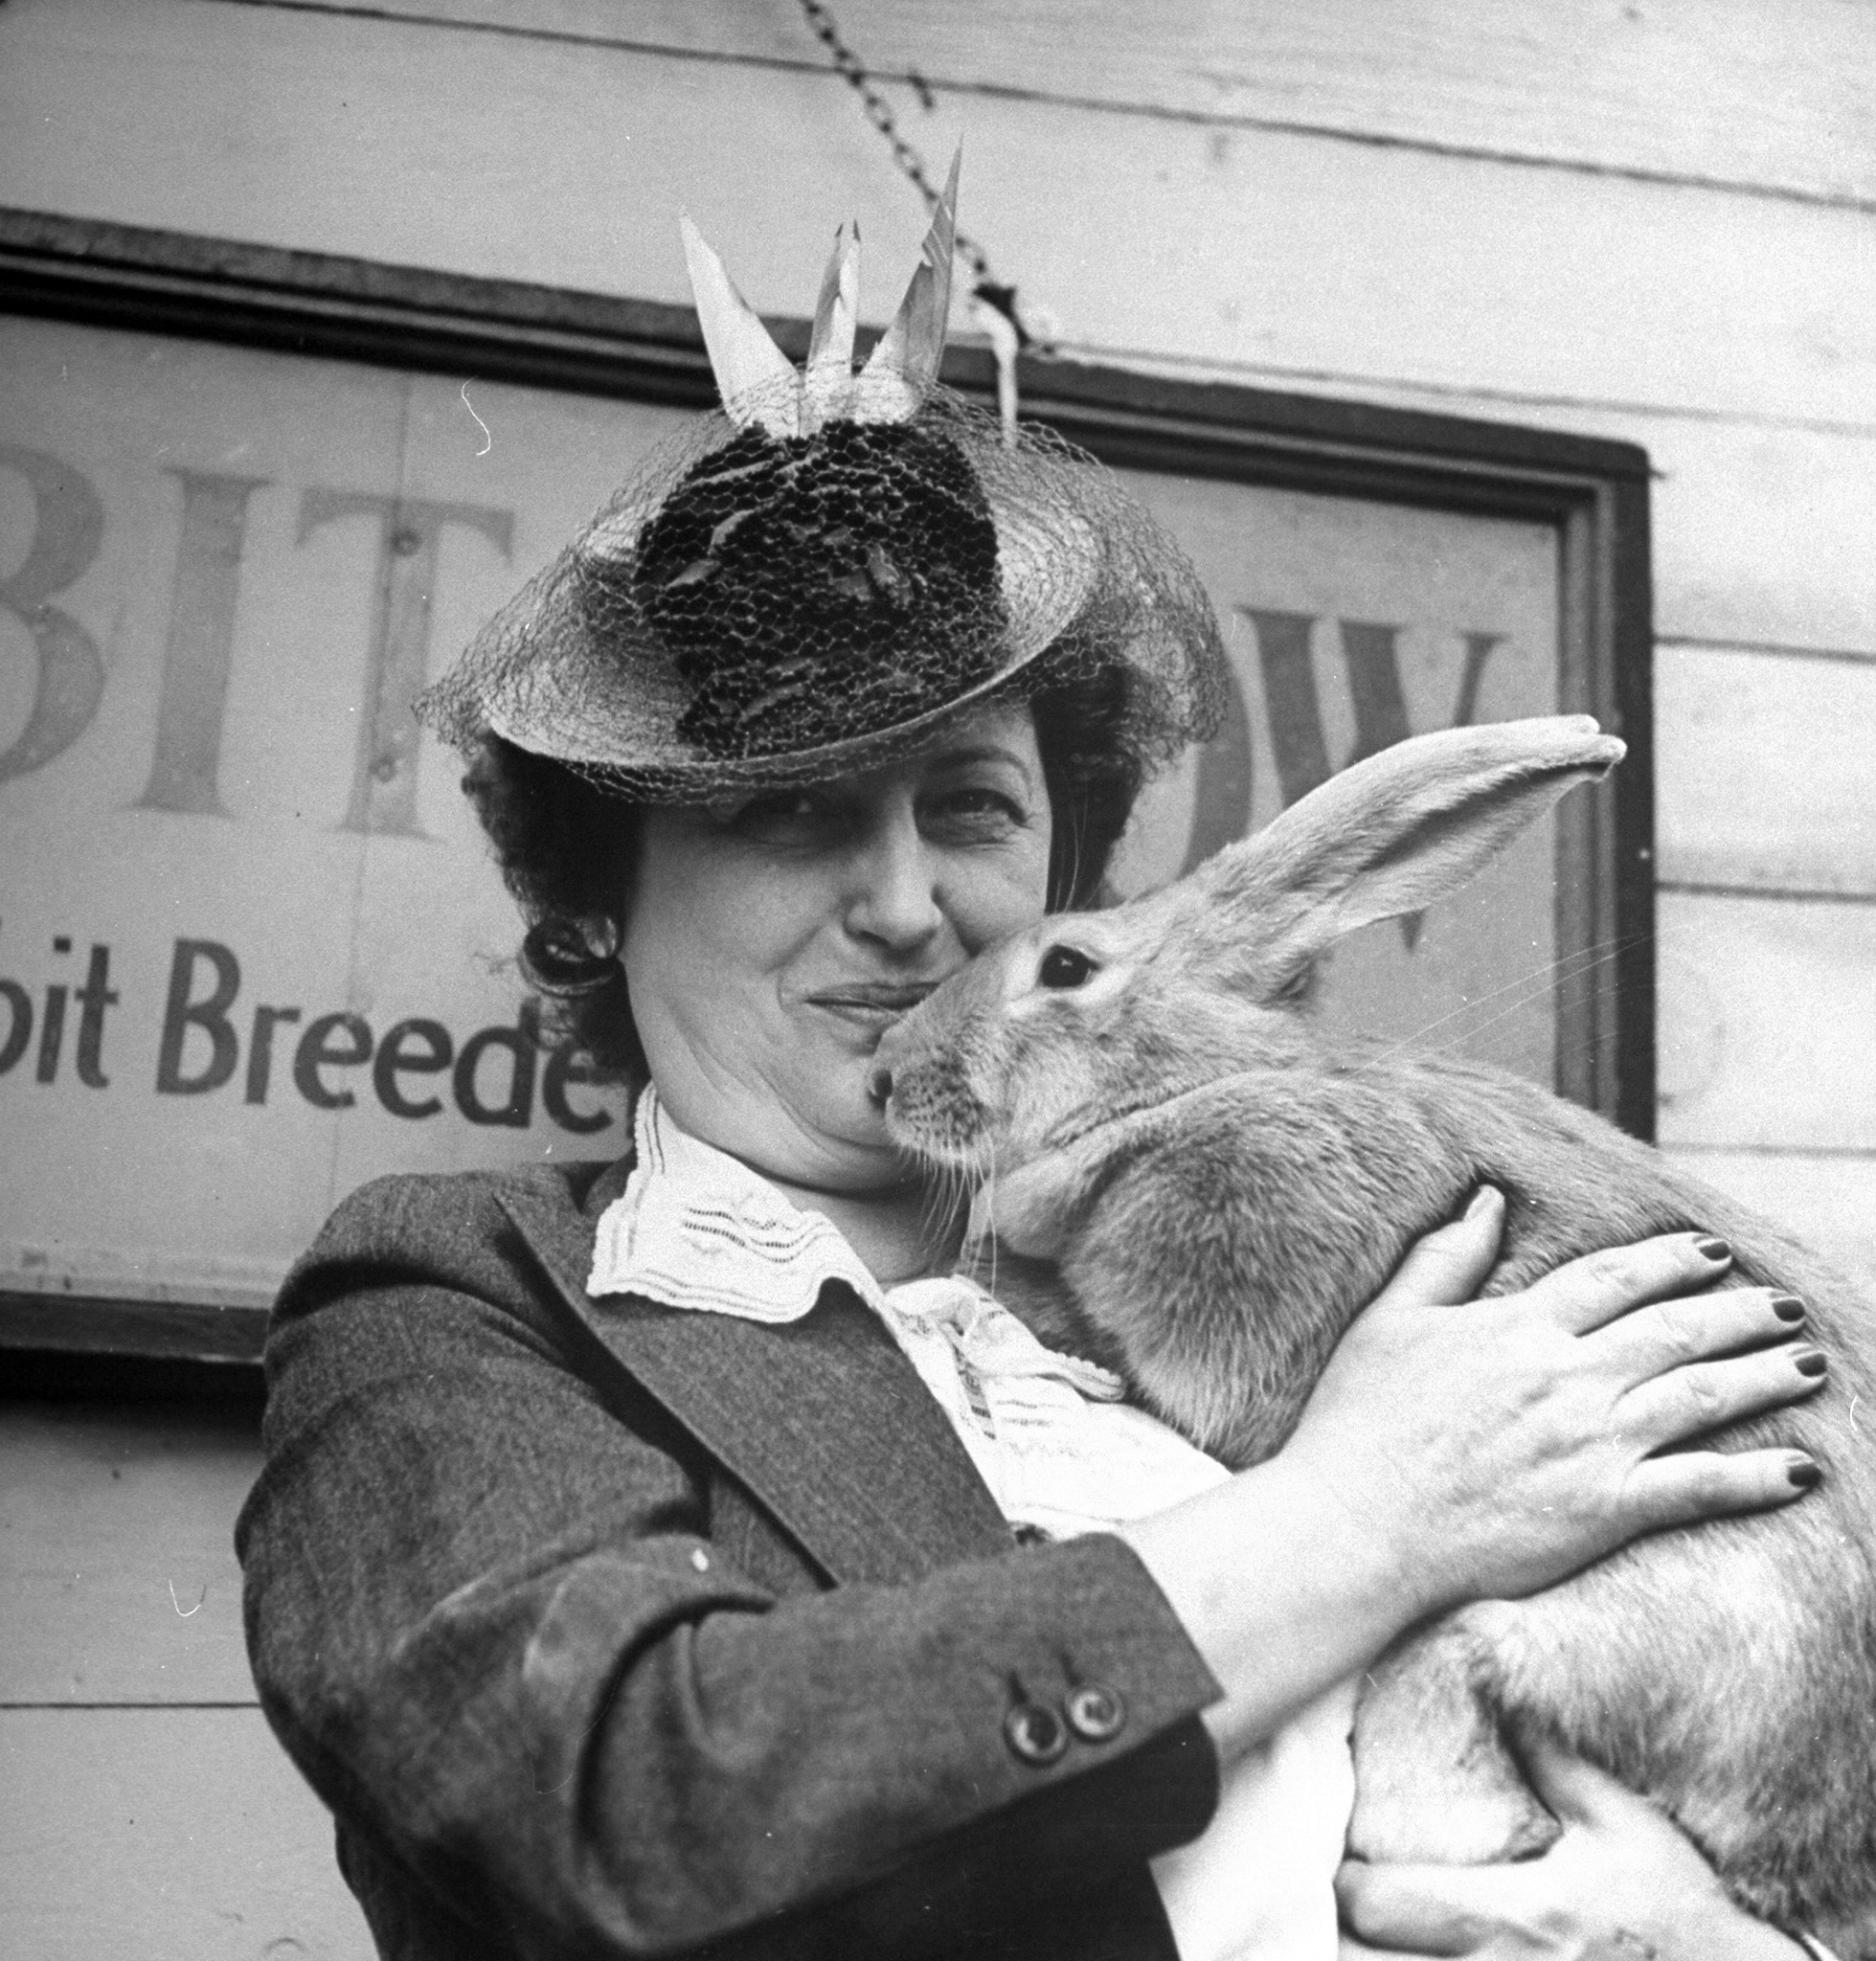 Long Island Rabbit Breeders Association Rabbit show, circa 1943.